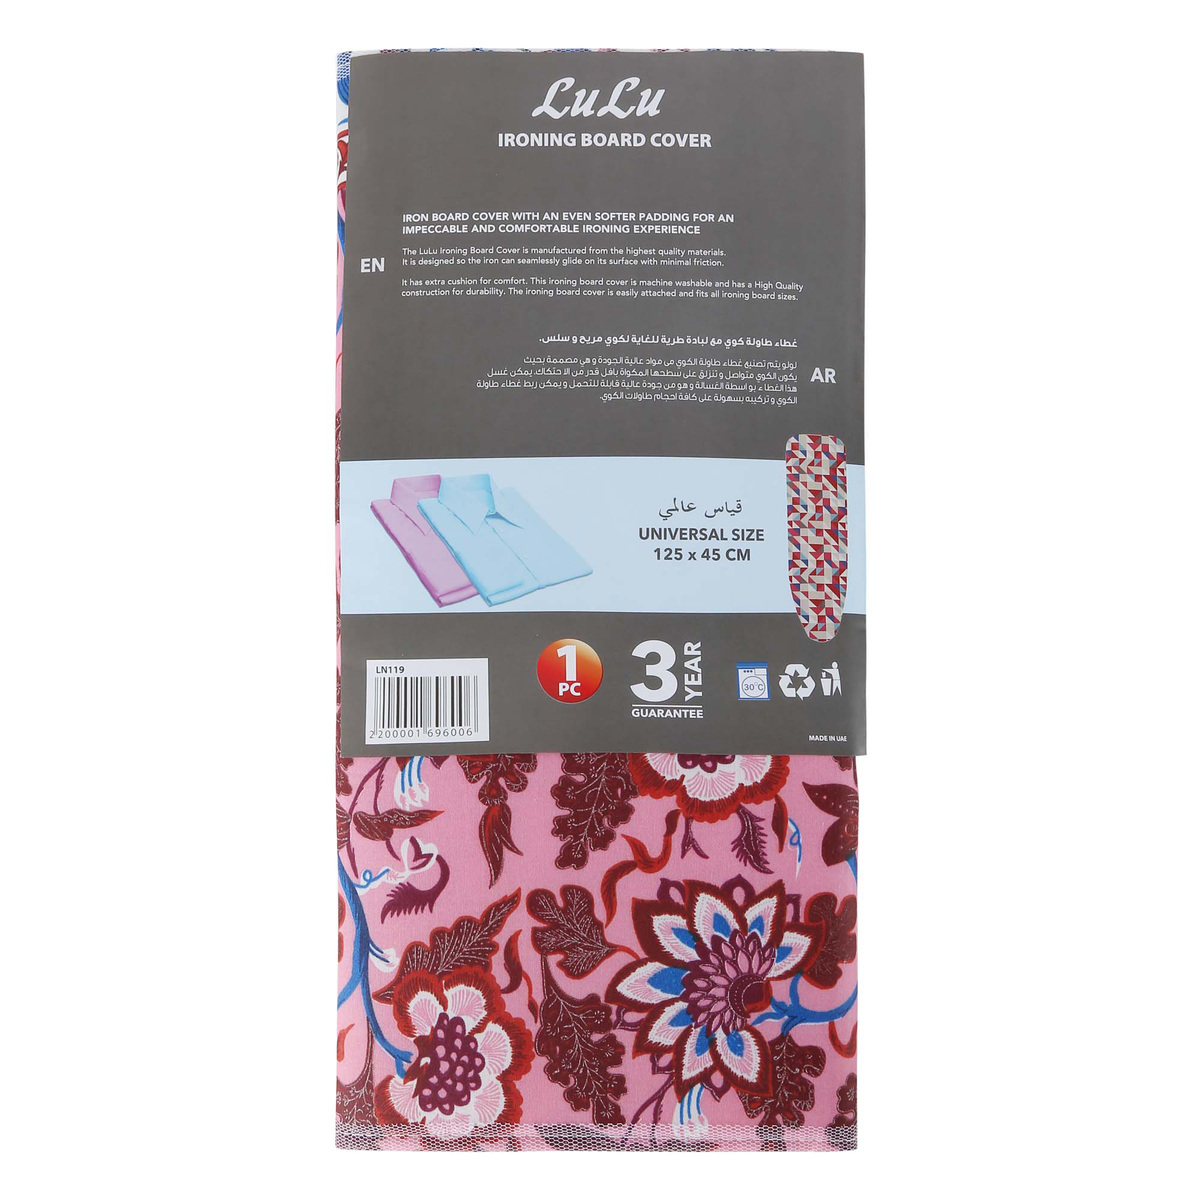 LuLu Ironing Board Cover, 1 Pc, 125 x 45 cm, Multicolour, LN119